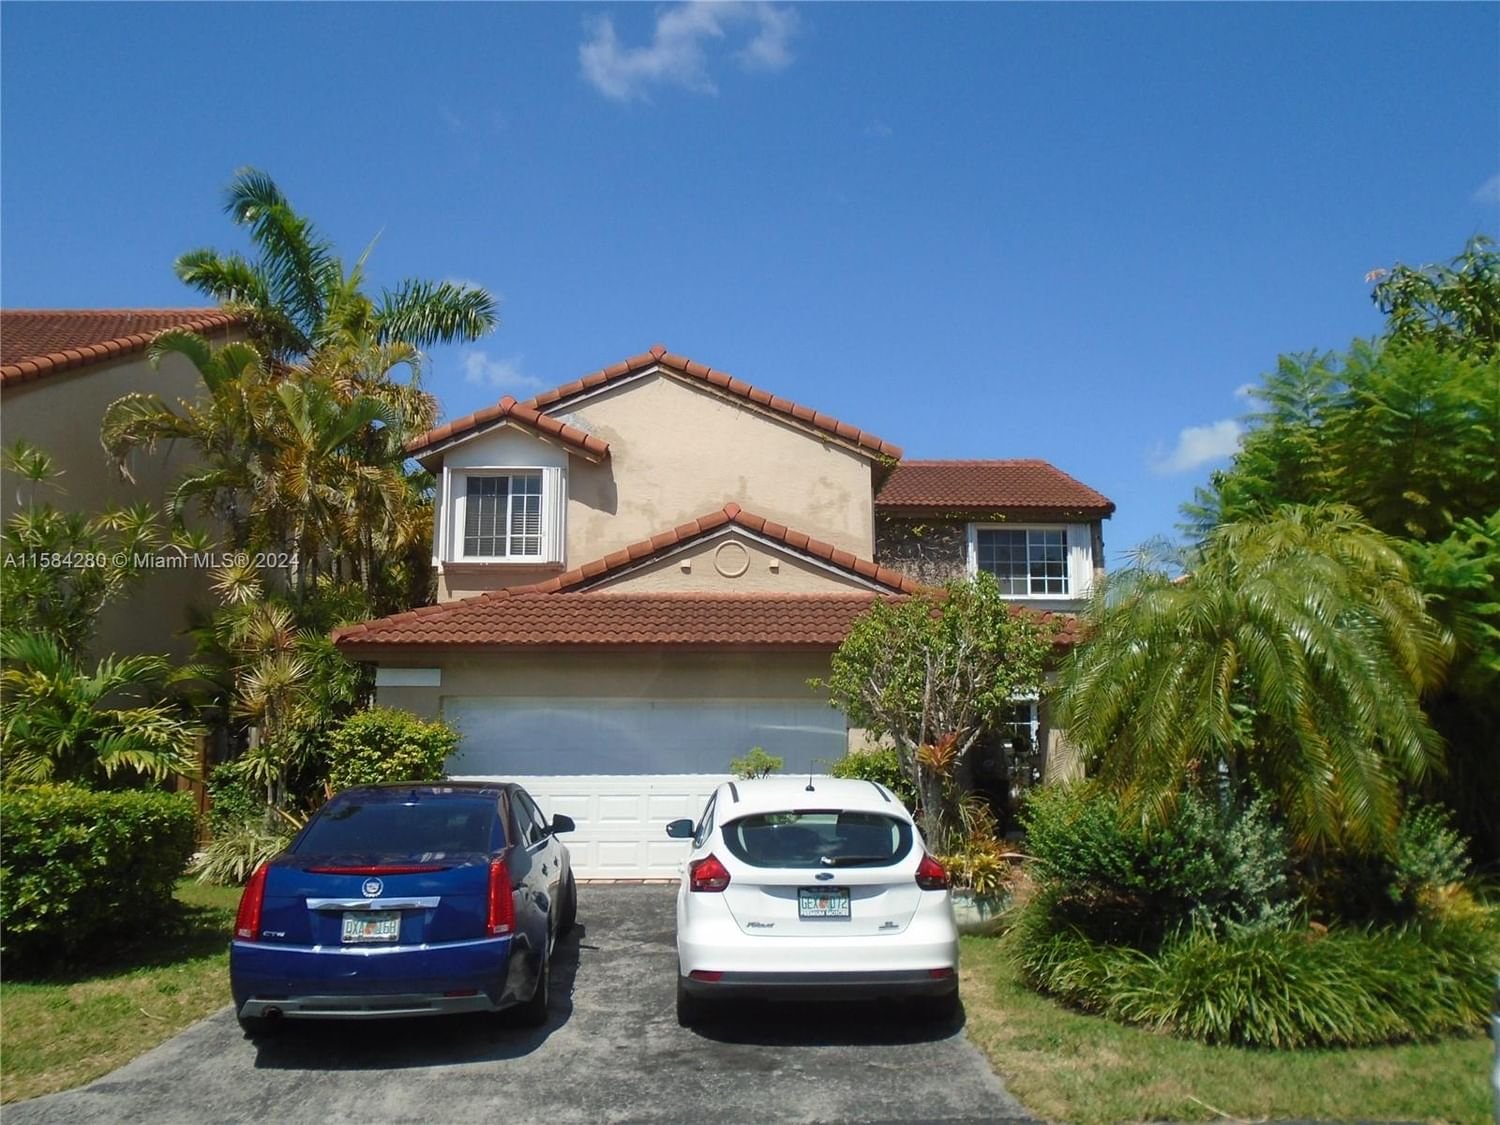 Real estate property located at 11251 151st Ct, Miami-Dade County, VIZCAYA AT THE HAMMOCKS R, Miami, FL